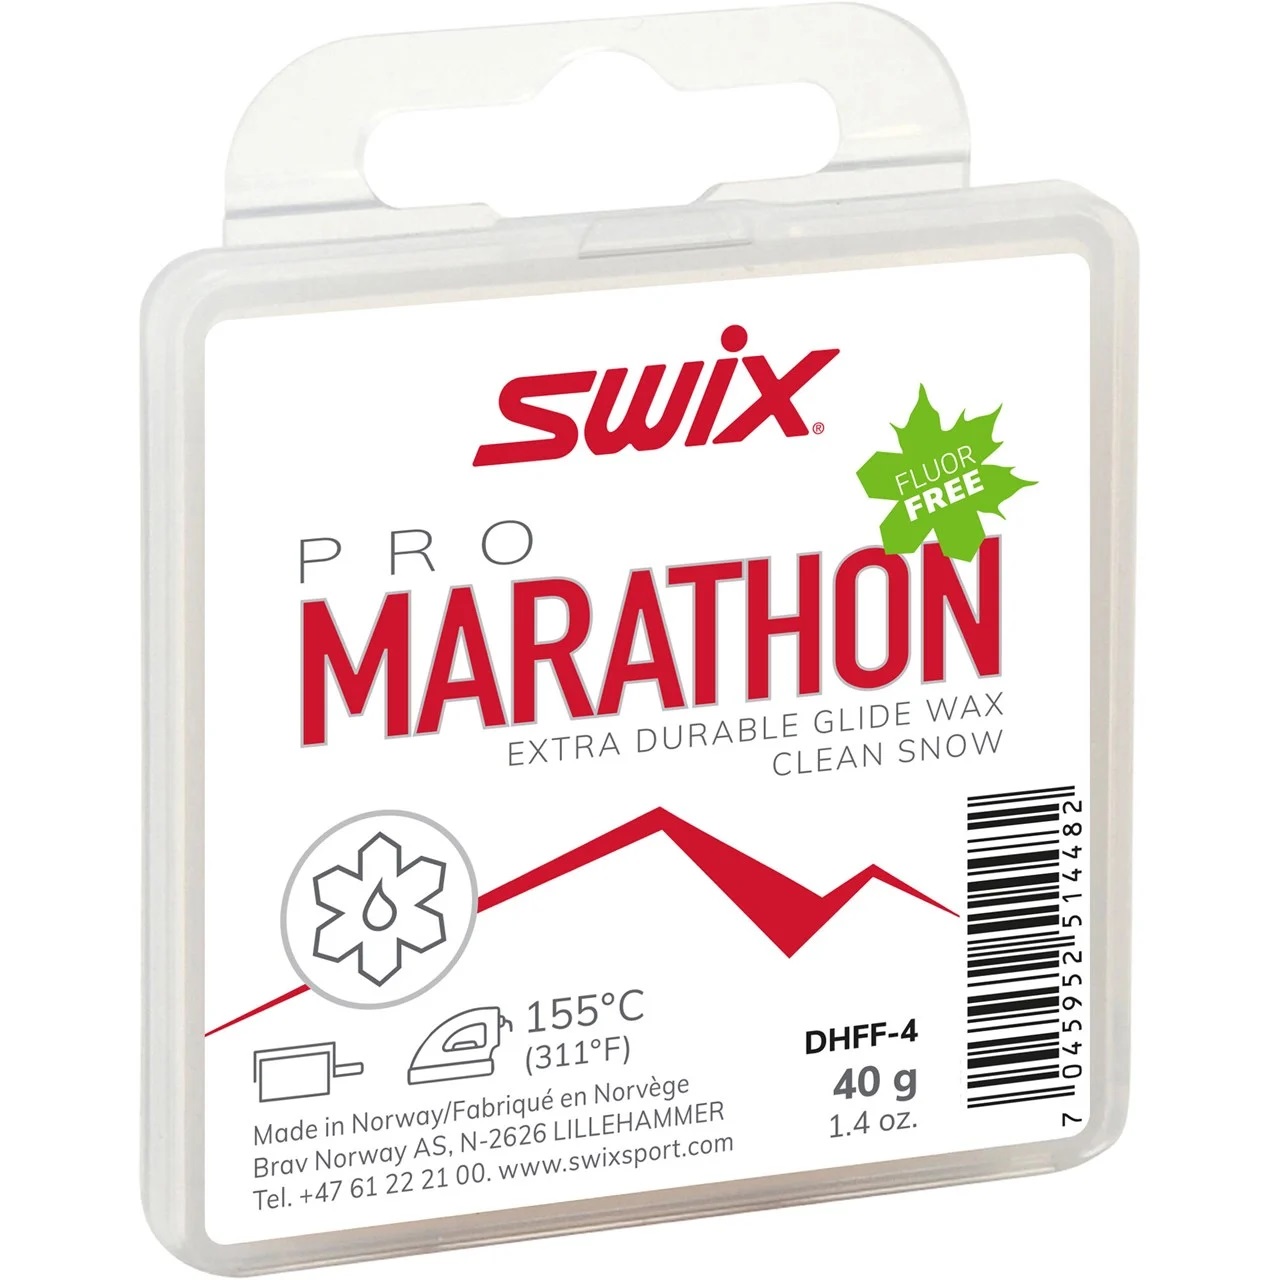 Swix Pure Marathon White Fluor Free